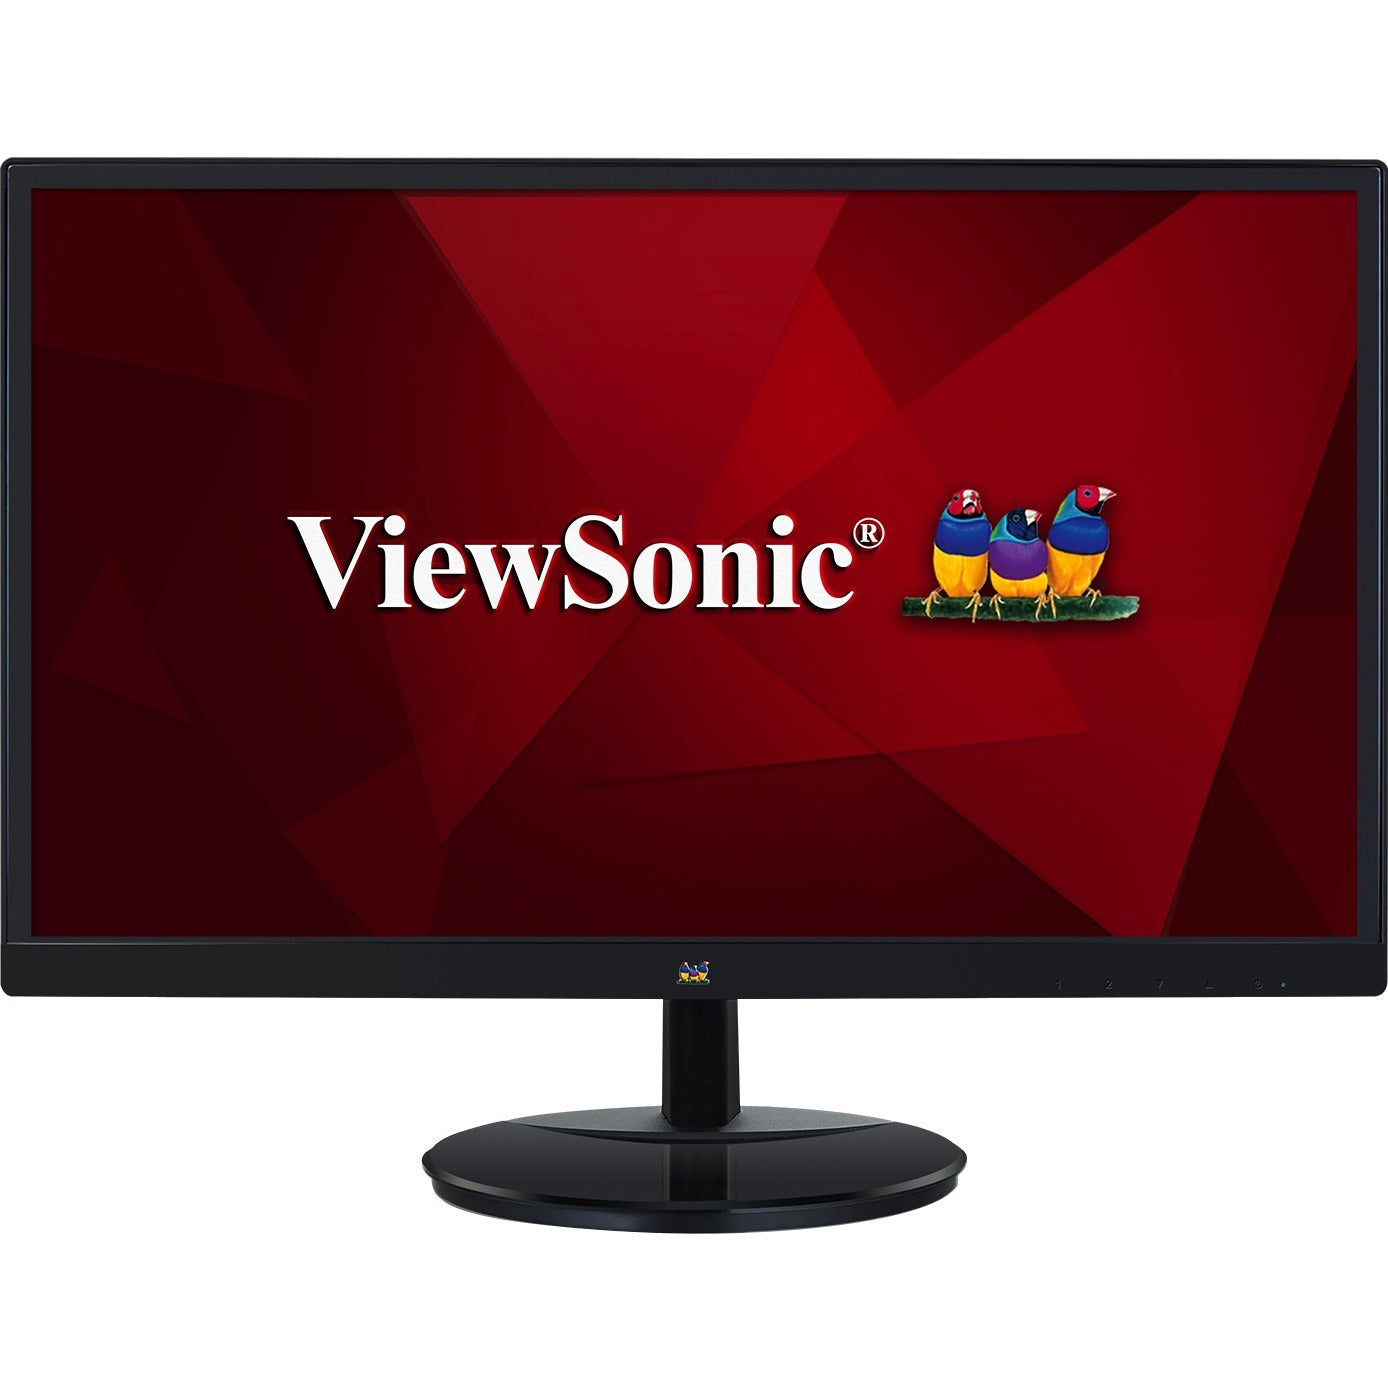 viewsonic-va2759-smh-27-inch-ips-1080p-led-monitor-with-100hz-hdmi-and-vga-inputs-va2759-smh-ips-1080p-led-monitor-with-100hz-hdmi-and-vga-250-cd-m2-27_vewva2759smh - 3